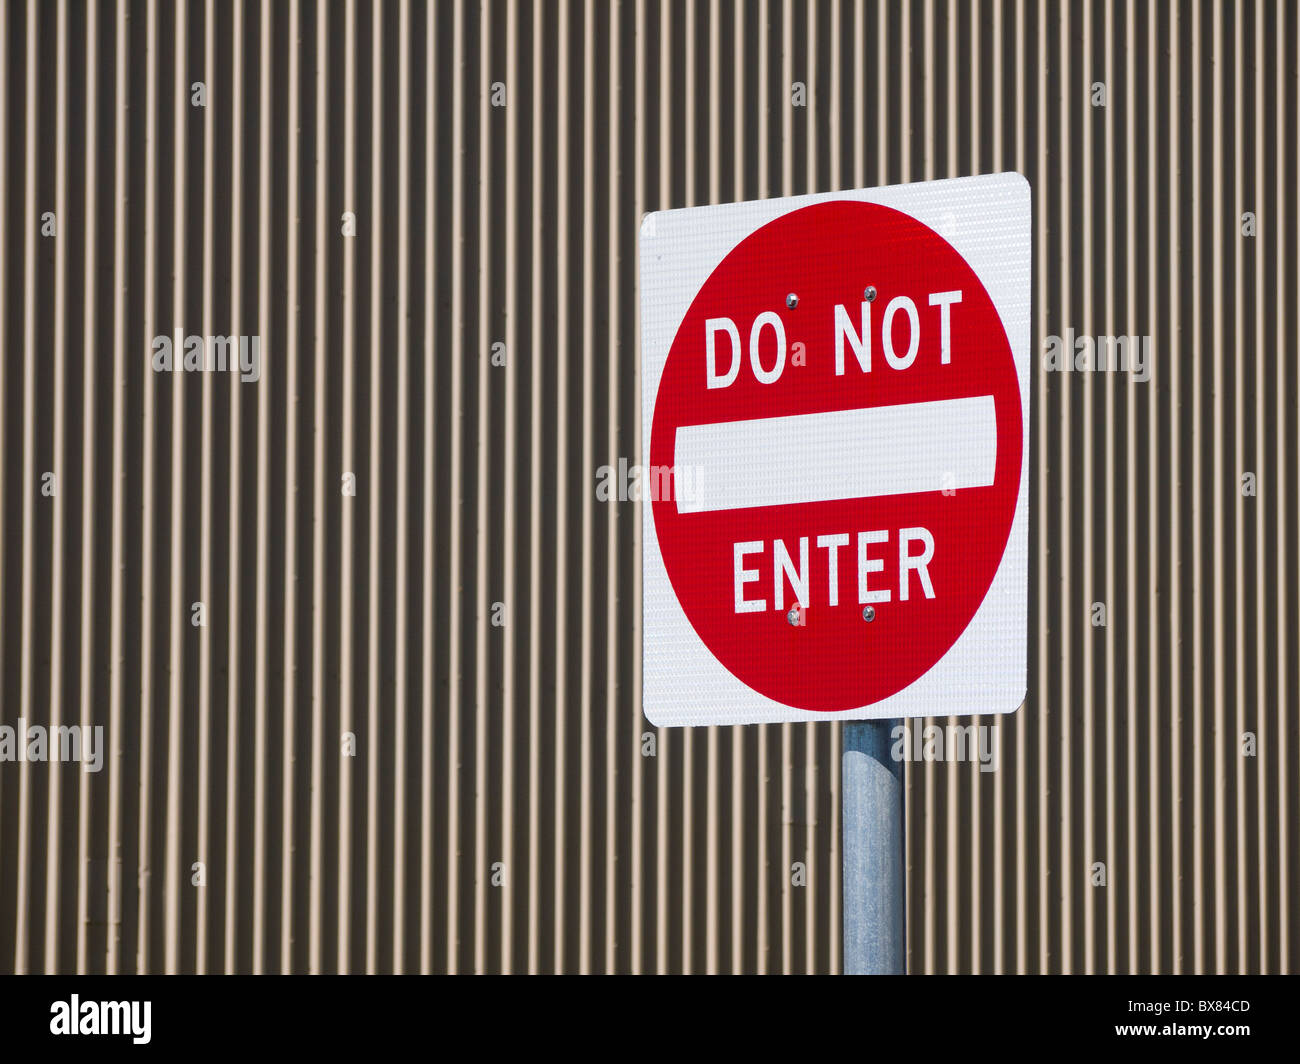 Sign saying DO NOT ENTER Stock Photo